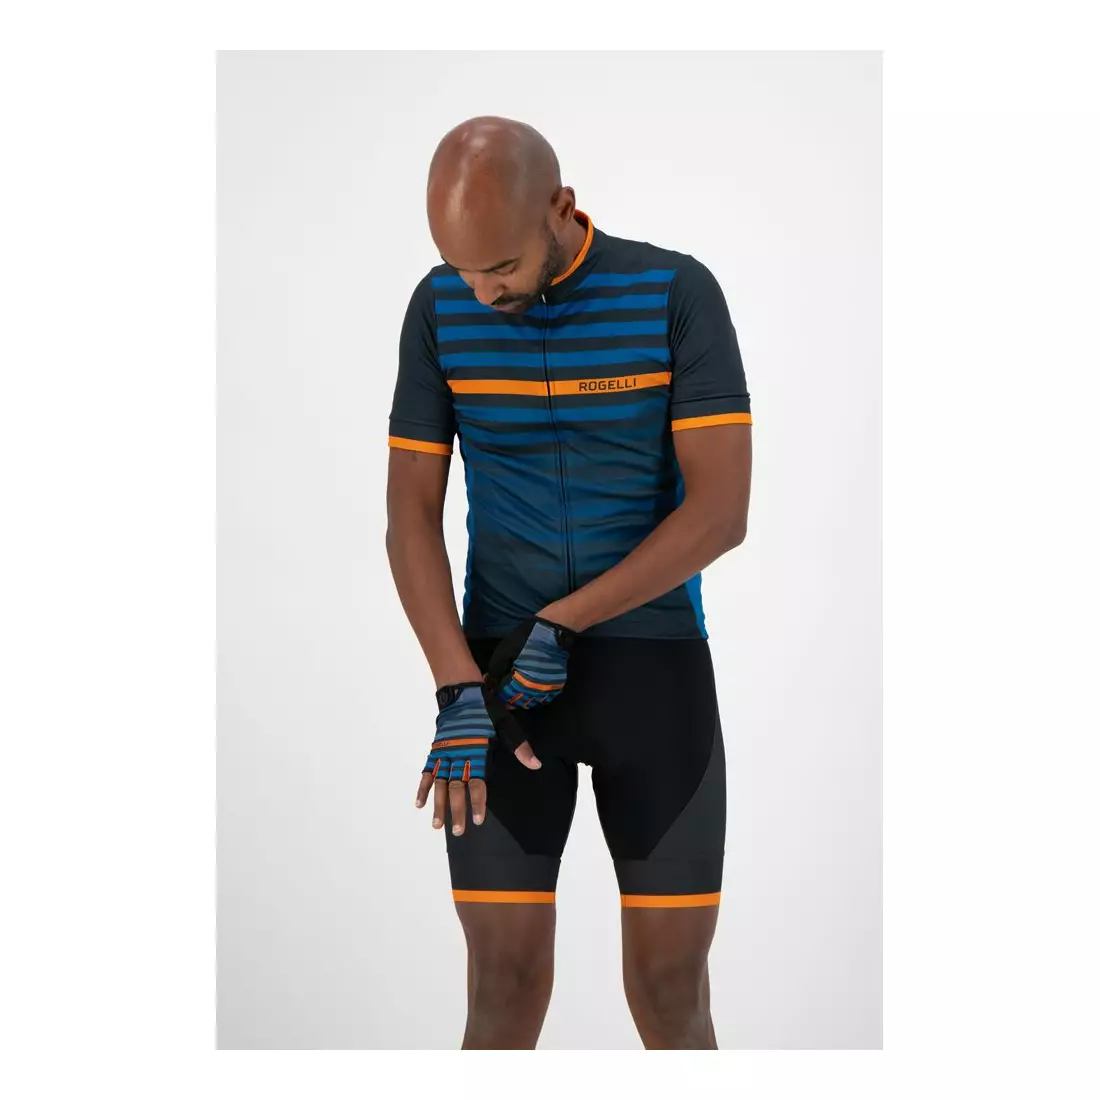 ROGELLI men's cycling gloves STRIPE blue/orange 006.312